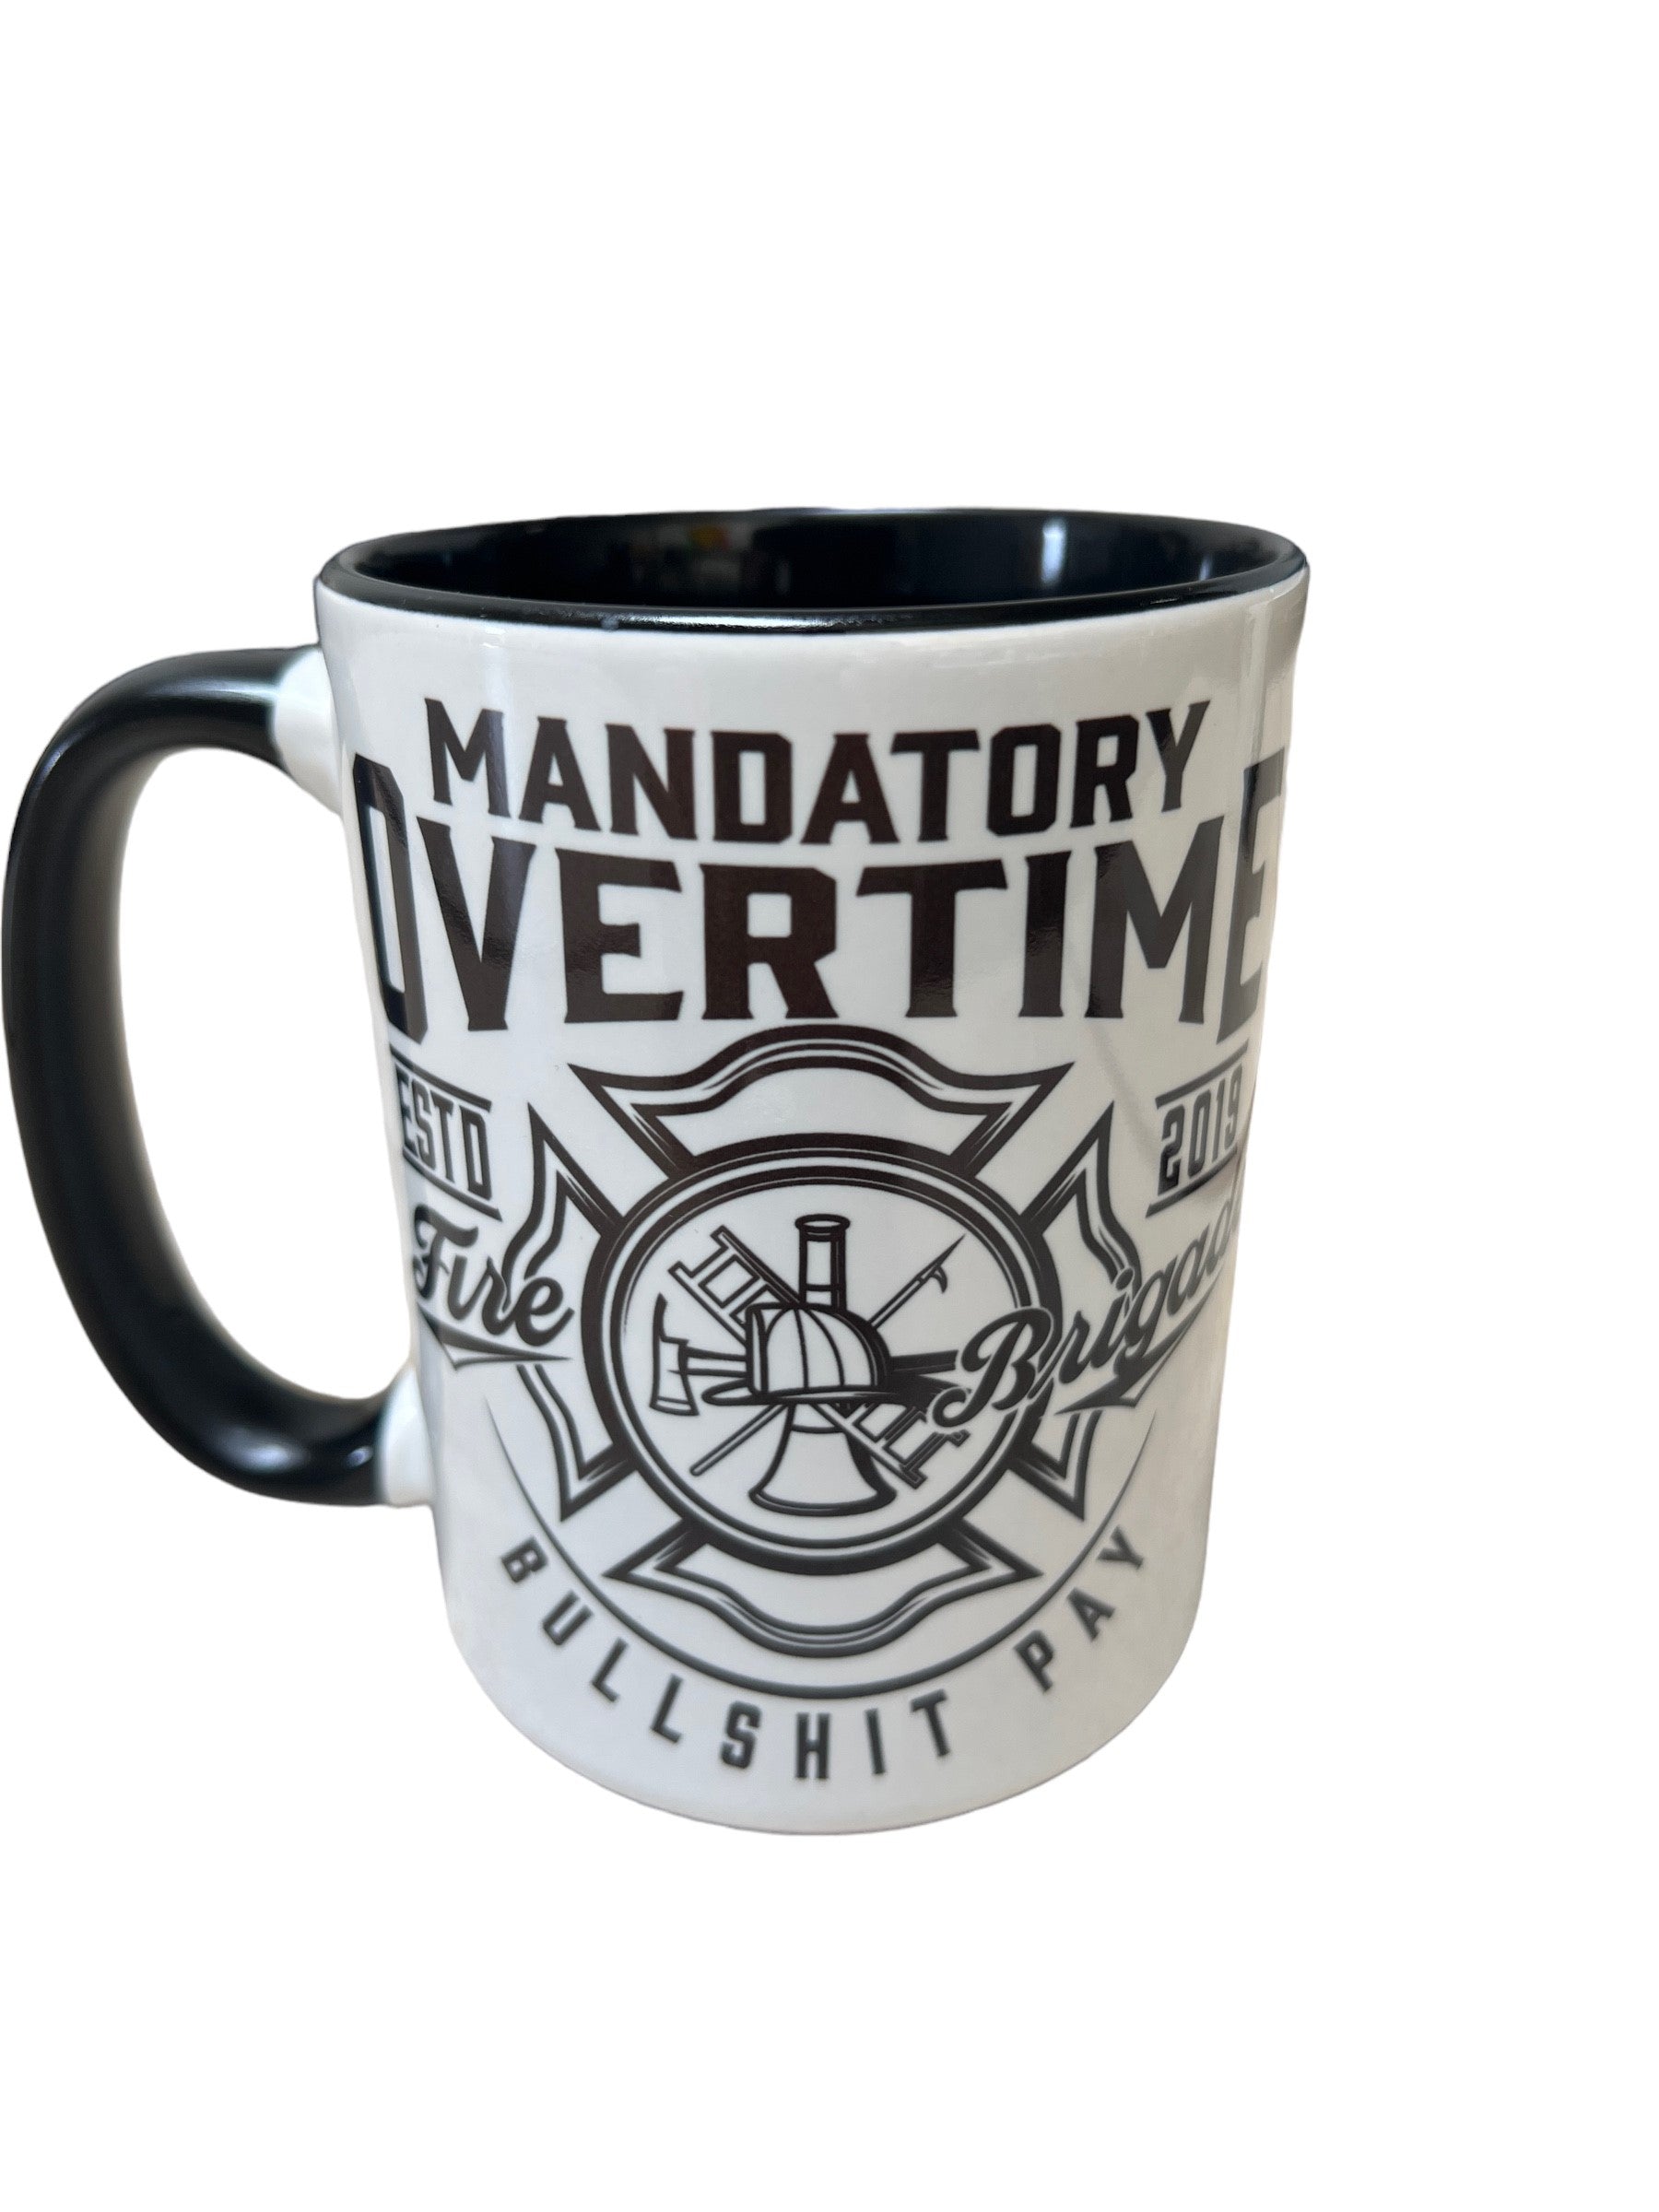 Mandatory Overtime Mug